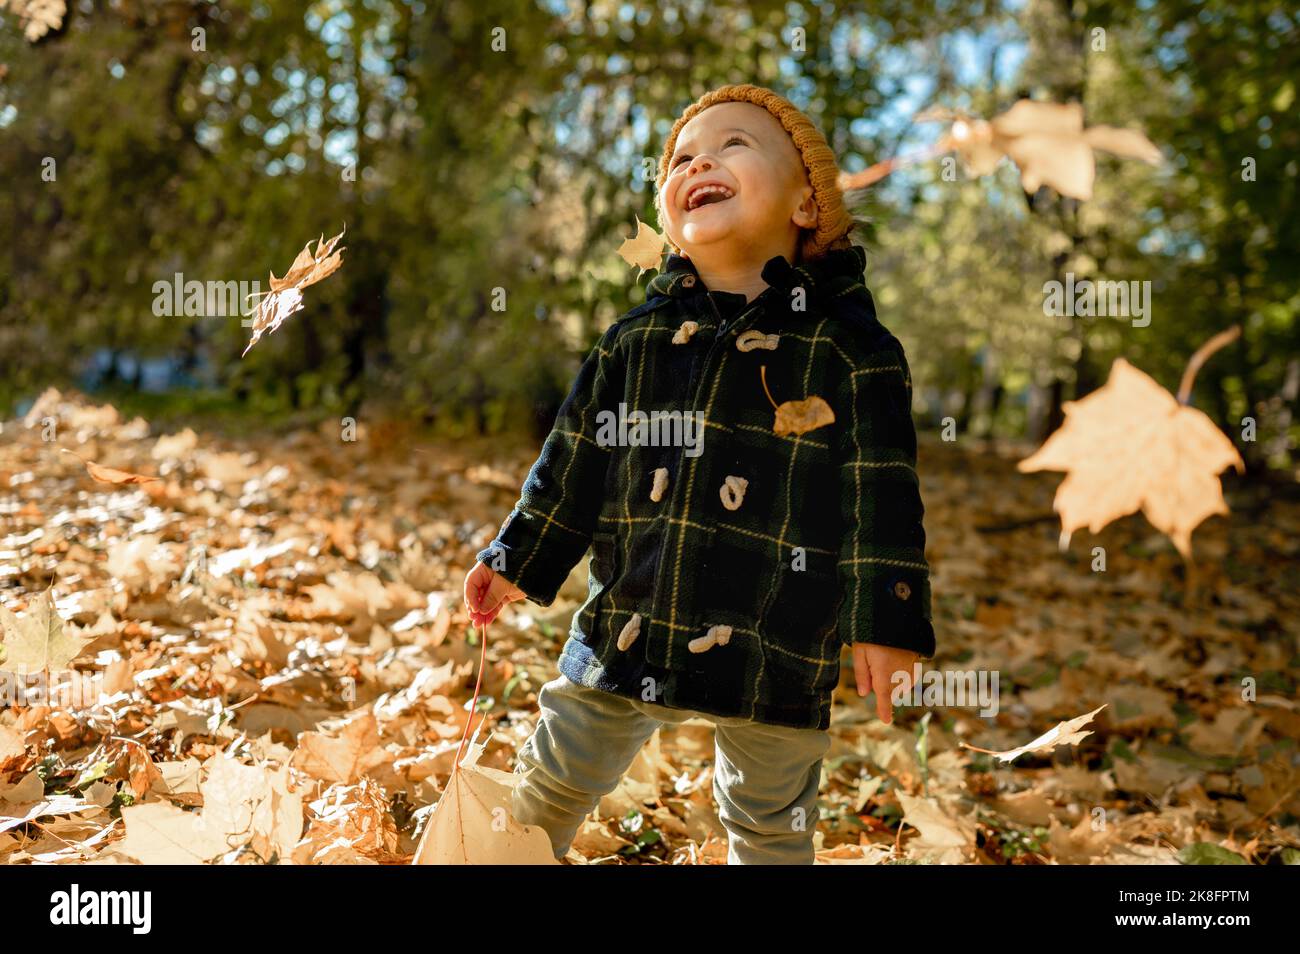 Junge hält Ahornblatt lachend im Park Stockfoto